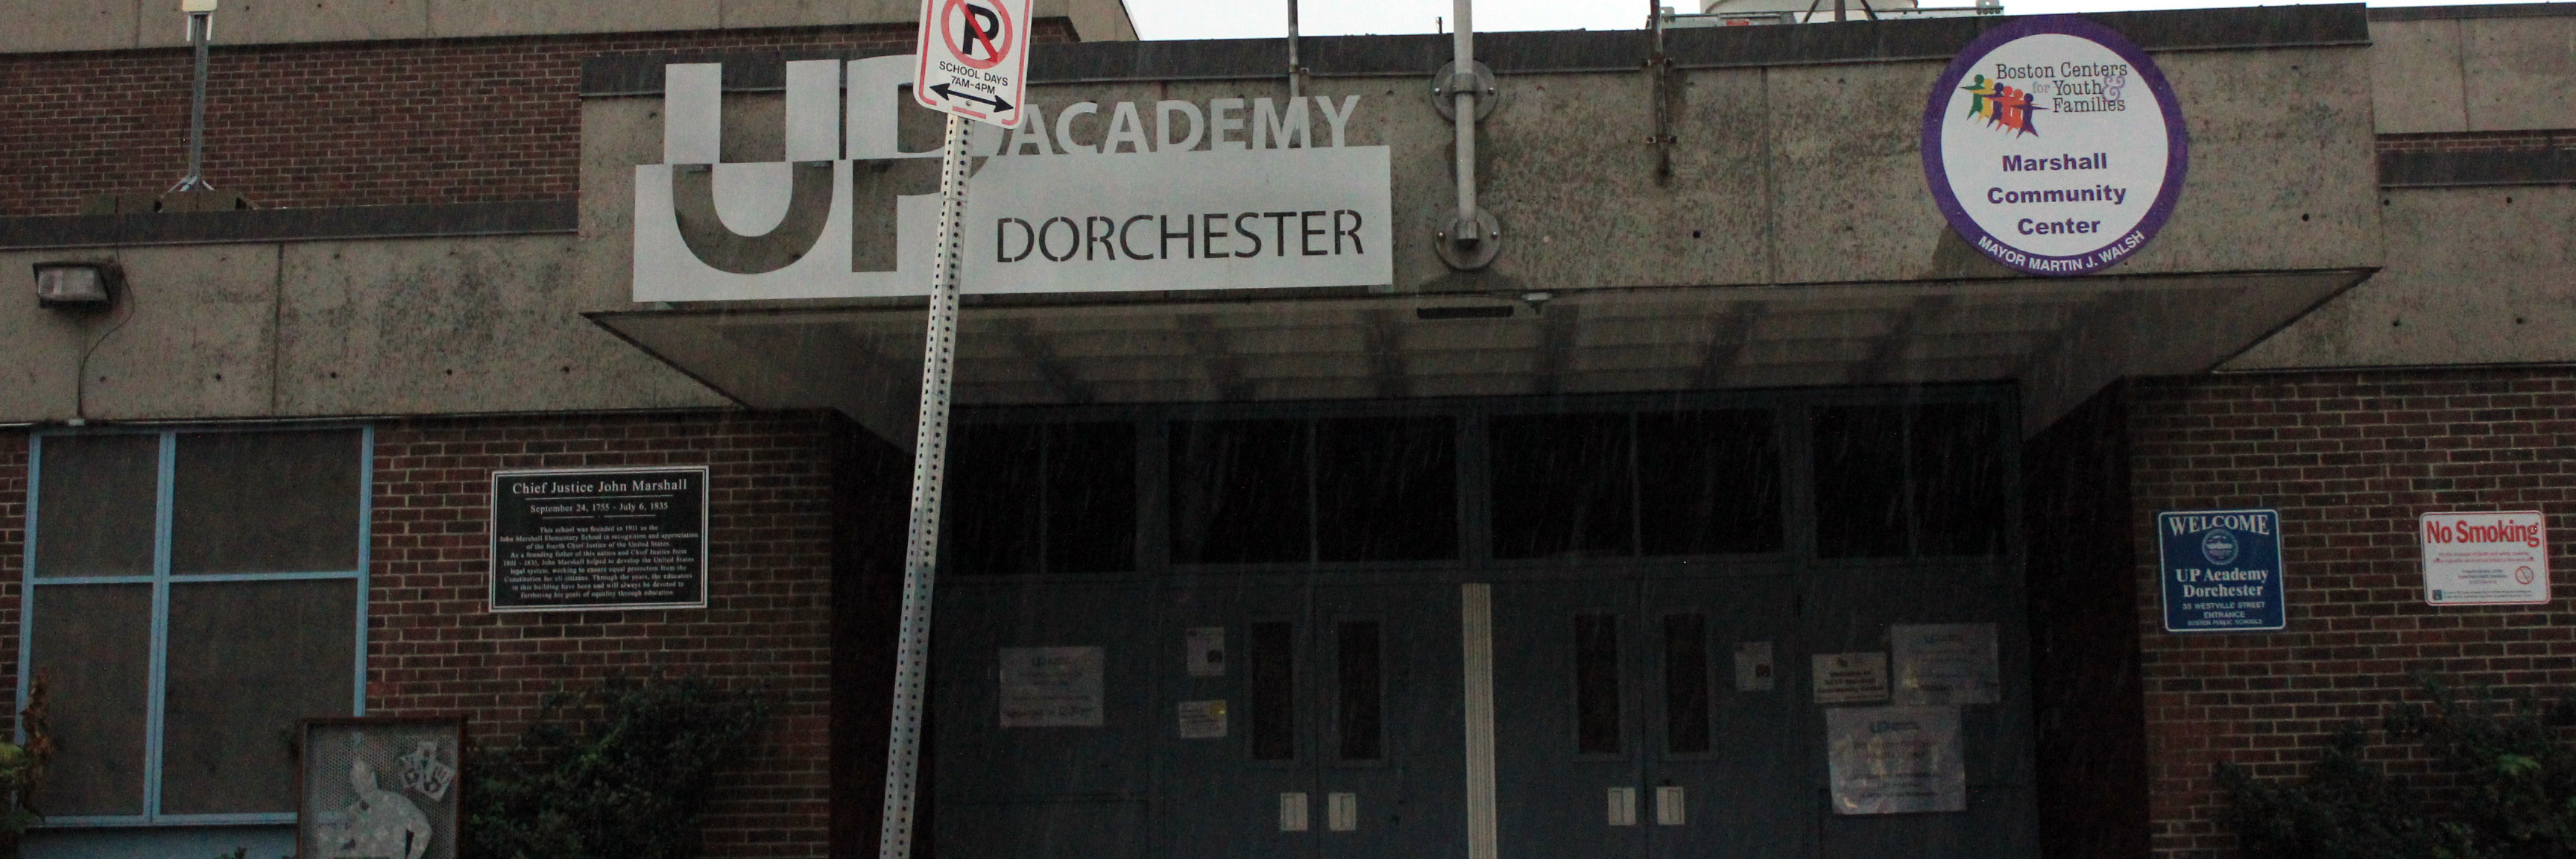 UP Academy Charter School of Dorchester Buscador de Escuelas de Boston